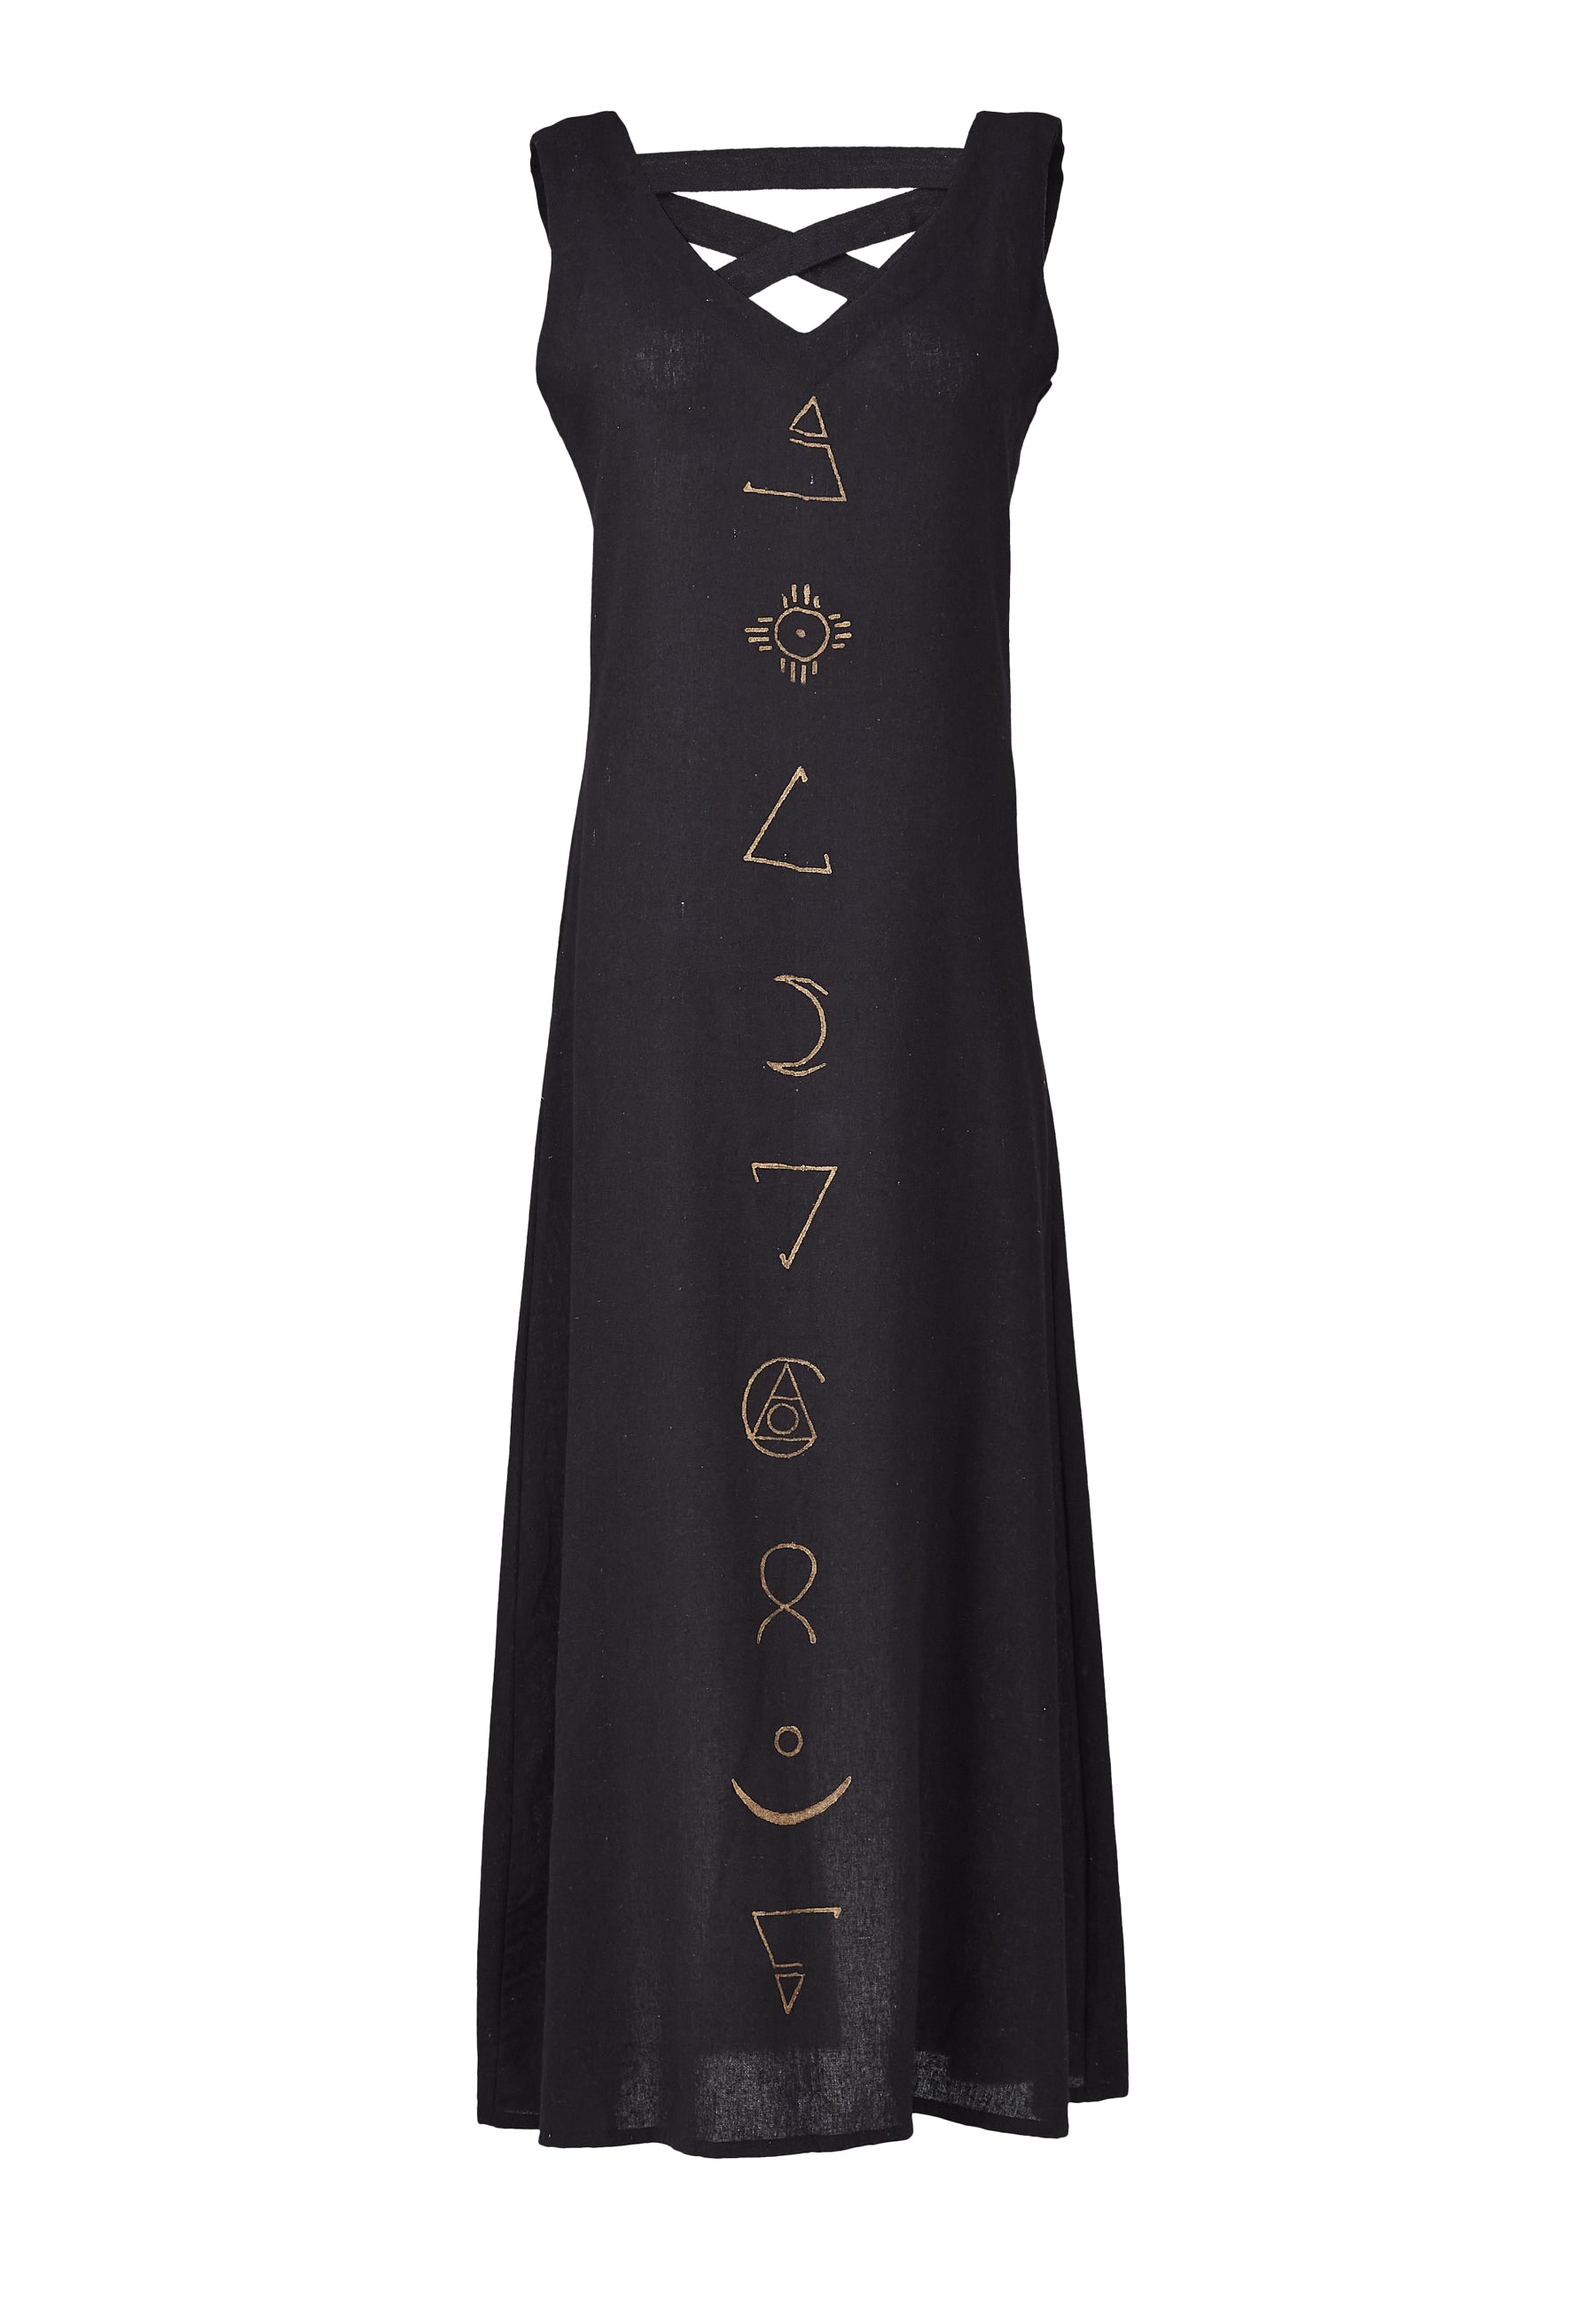 Iliana Black Dress